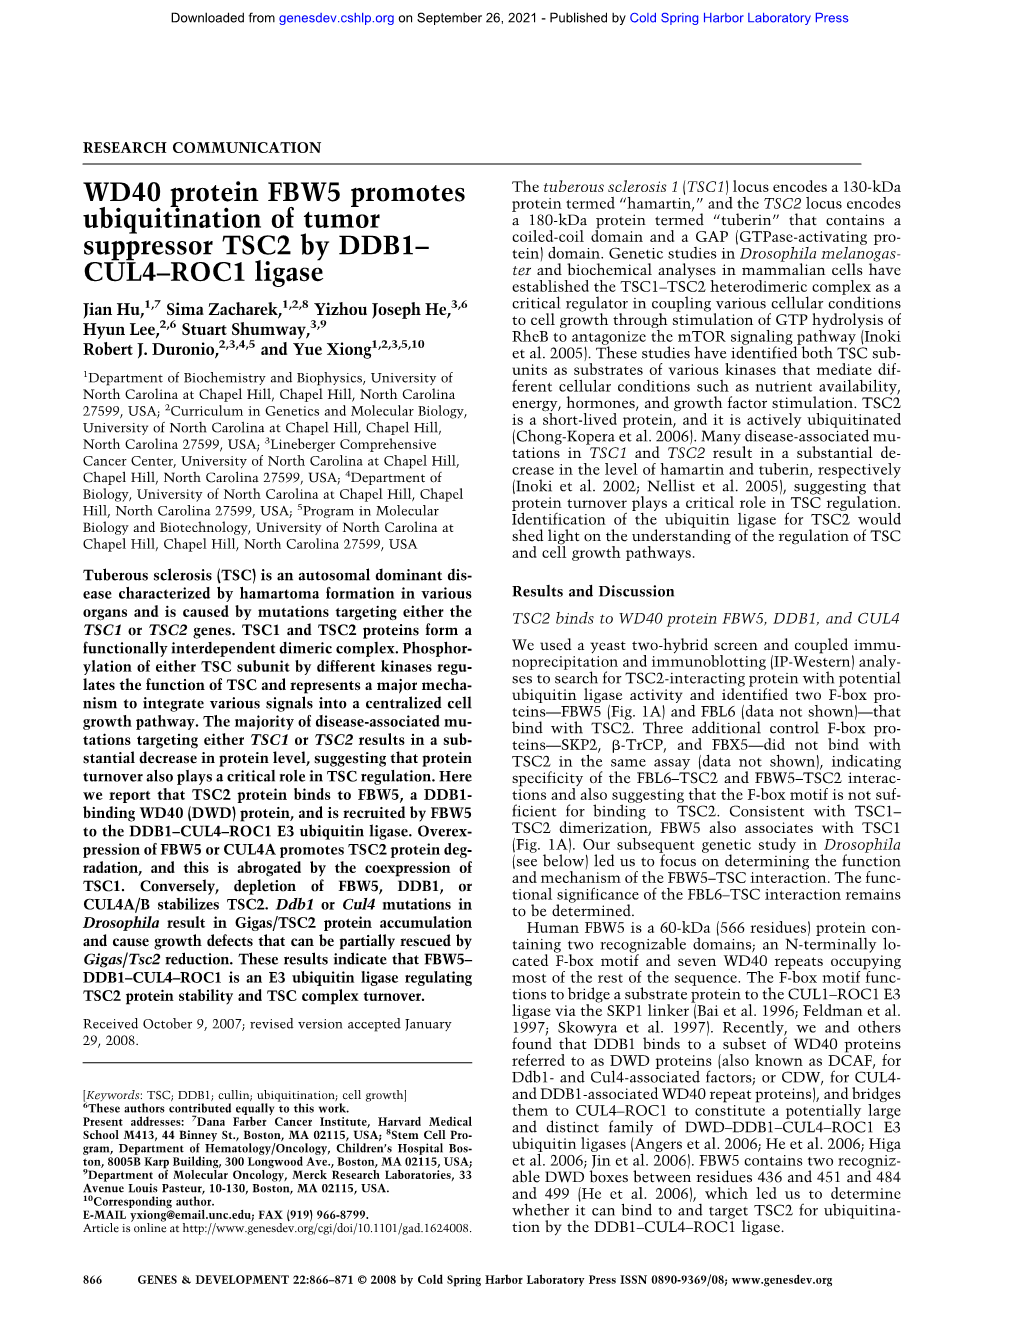 WD40 Protein FBW5 Promotes Ubiquitination of Tumor Suppressor TSC2 by DDB1−CUL4−ROC1 Ligase